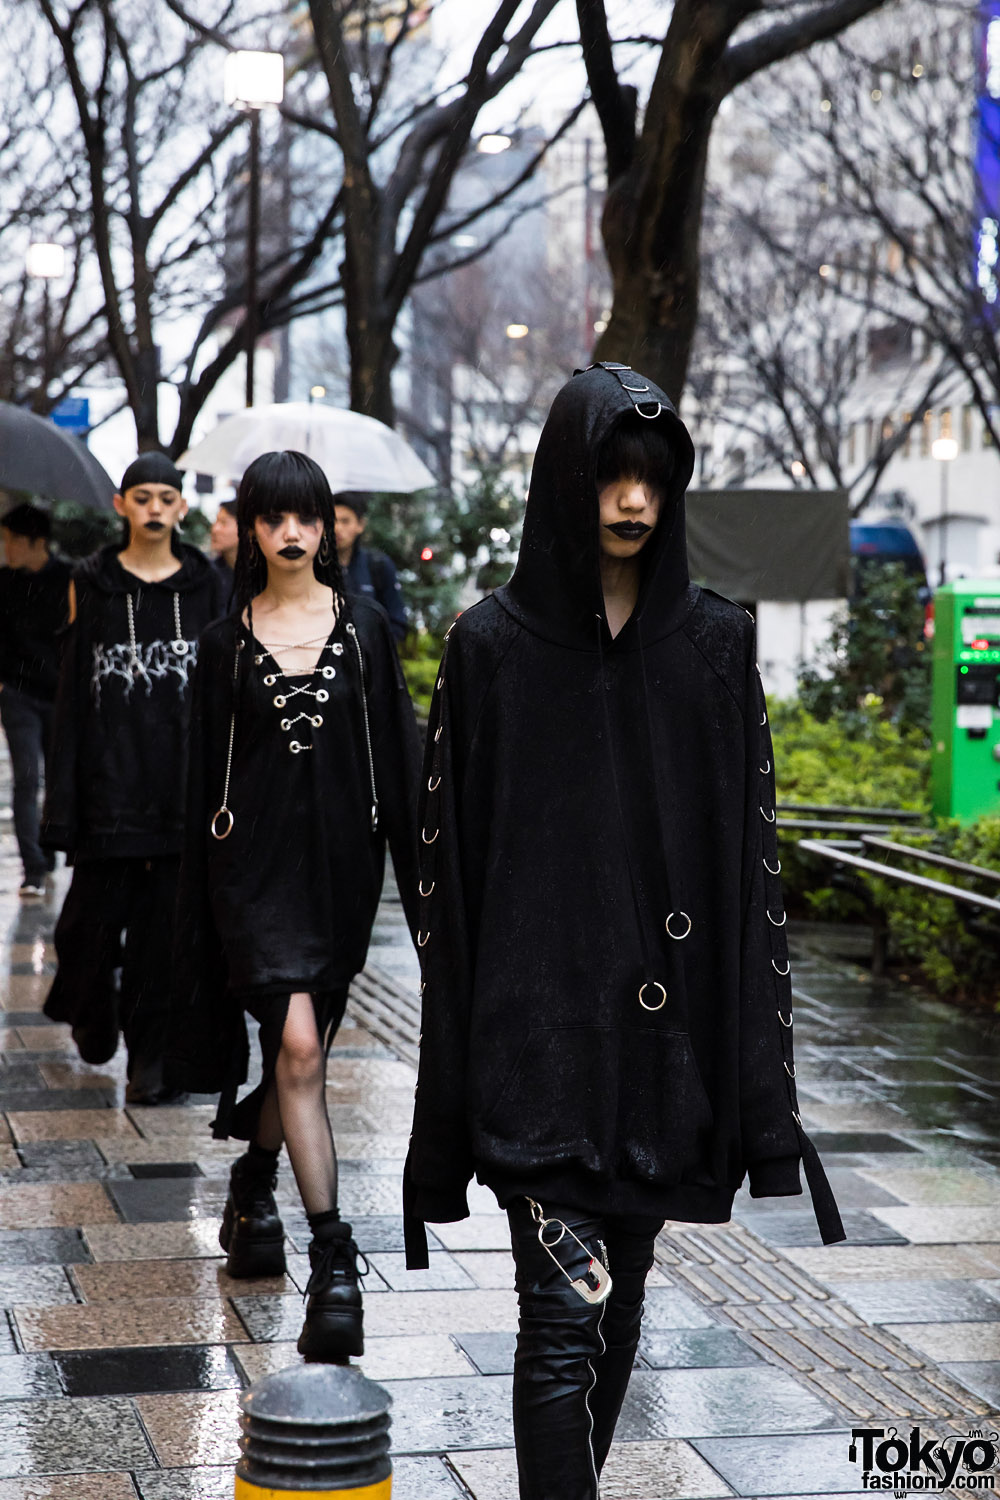 BERCERK "Dirty City" - Japanese Fashion Brand's Dark Harajuku Street Parade